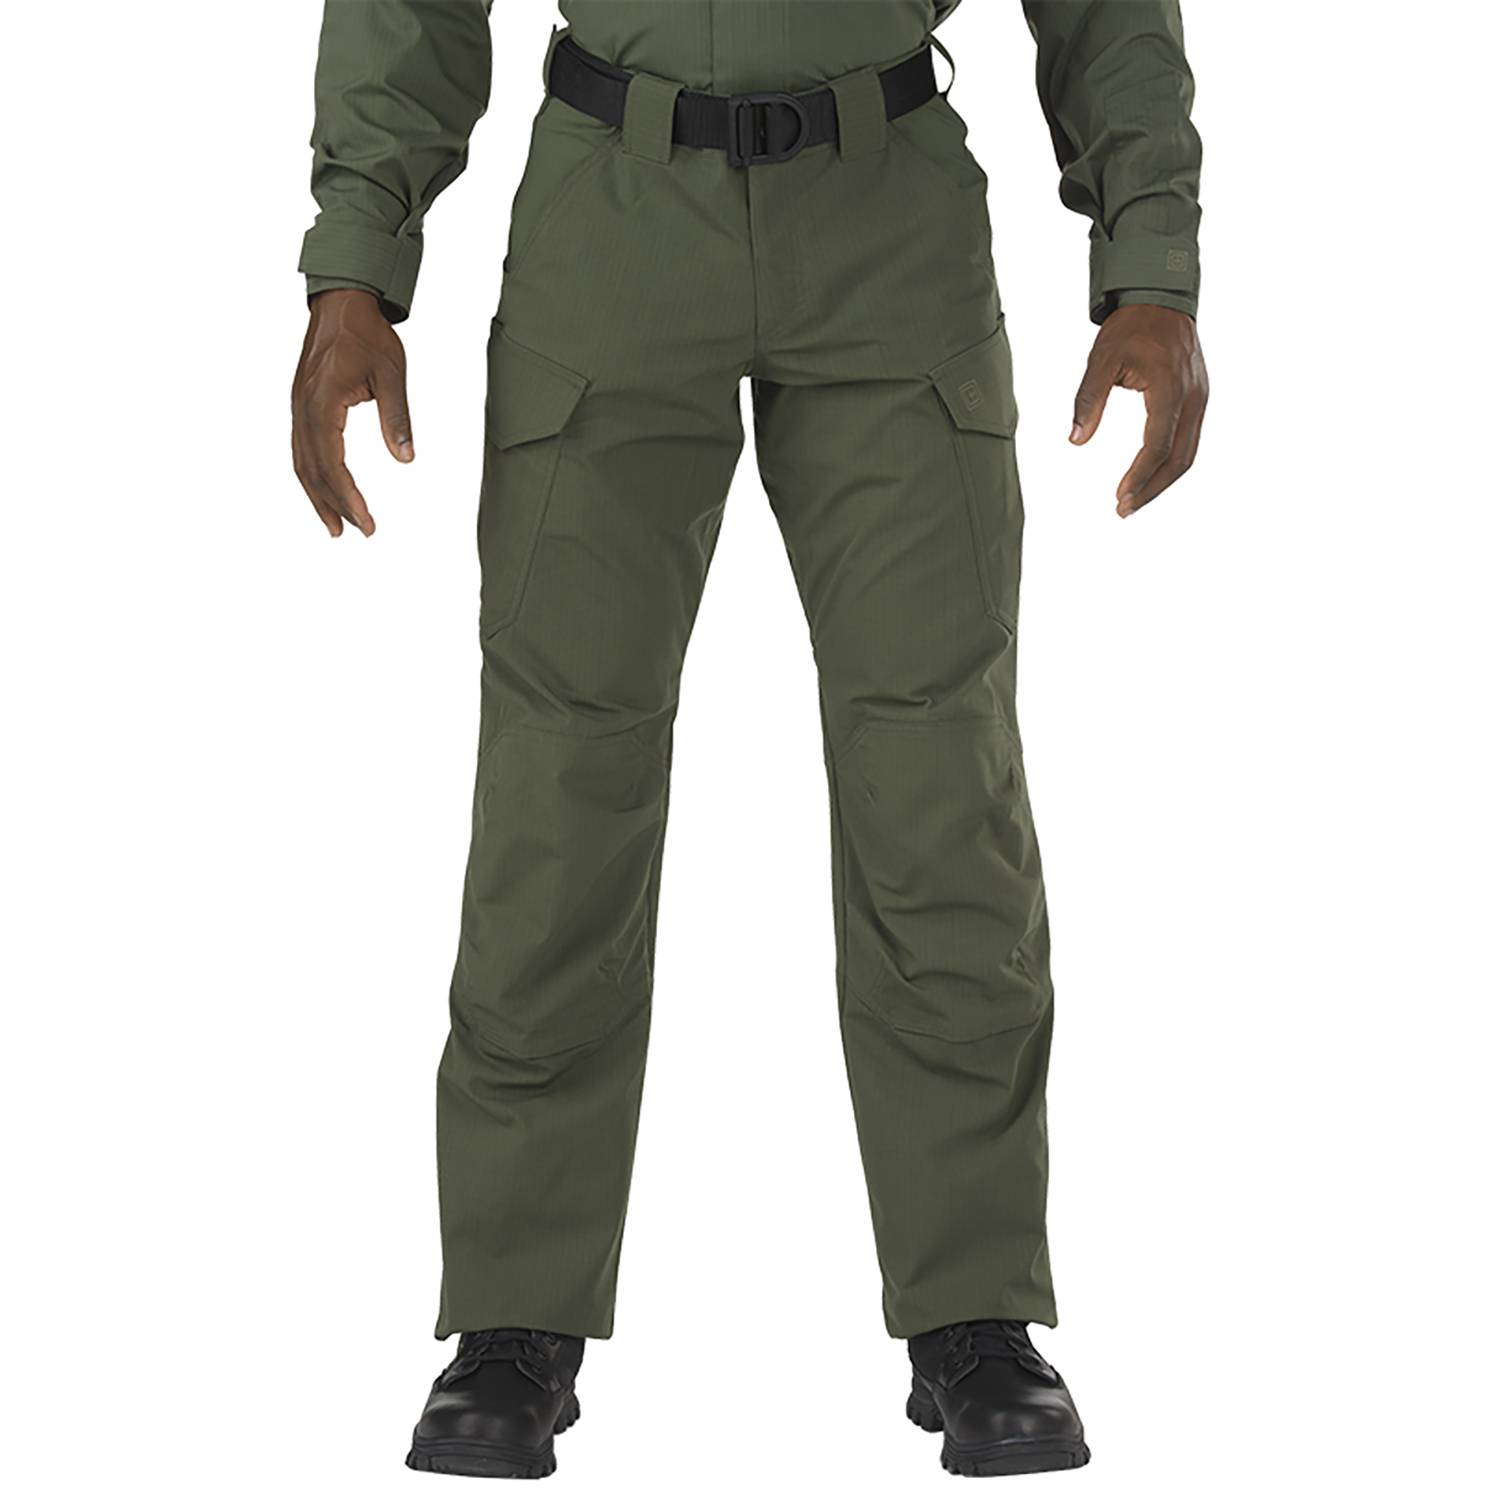 Tactical Uniform for Military, Law Enforcement, Buy 5.11 Stryke Pant  Online